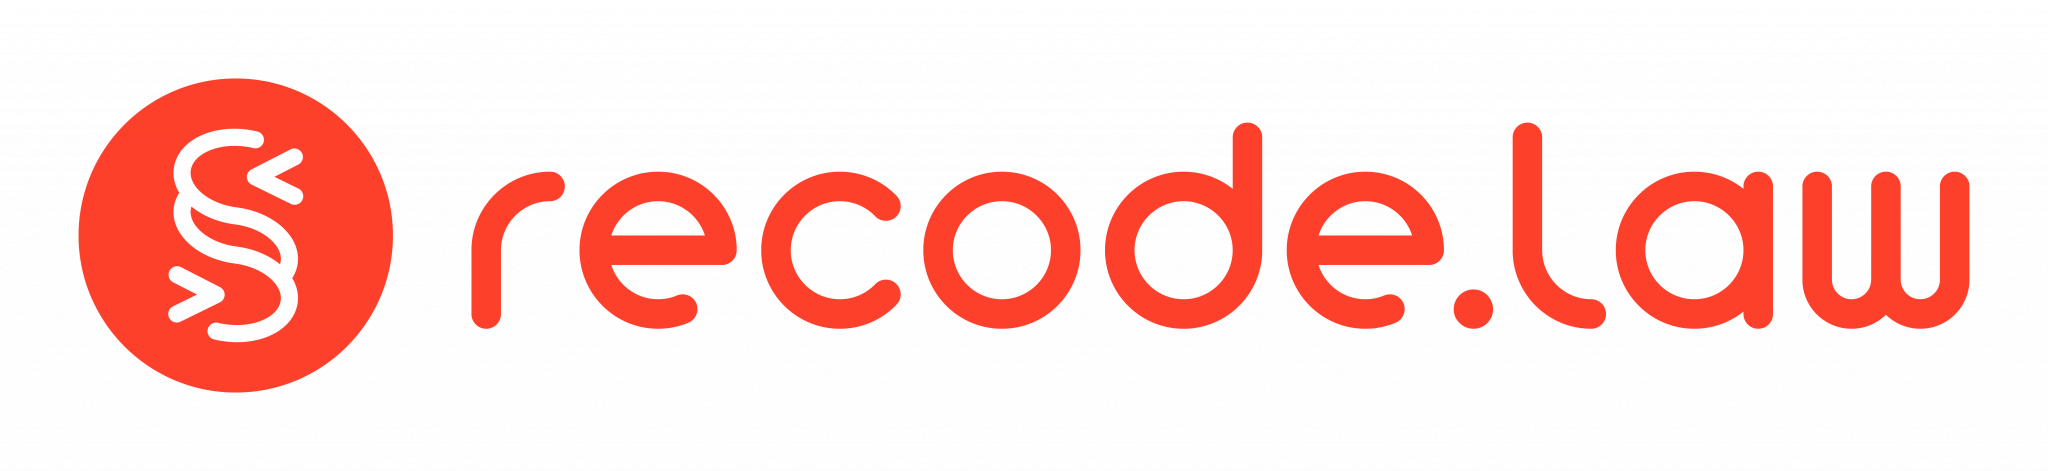 Recode.Law Logo